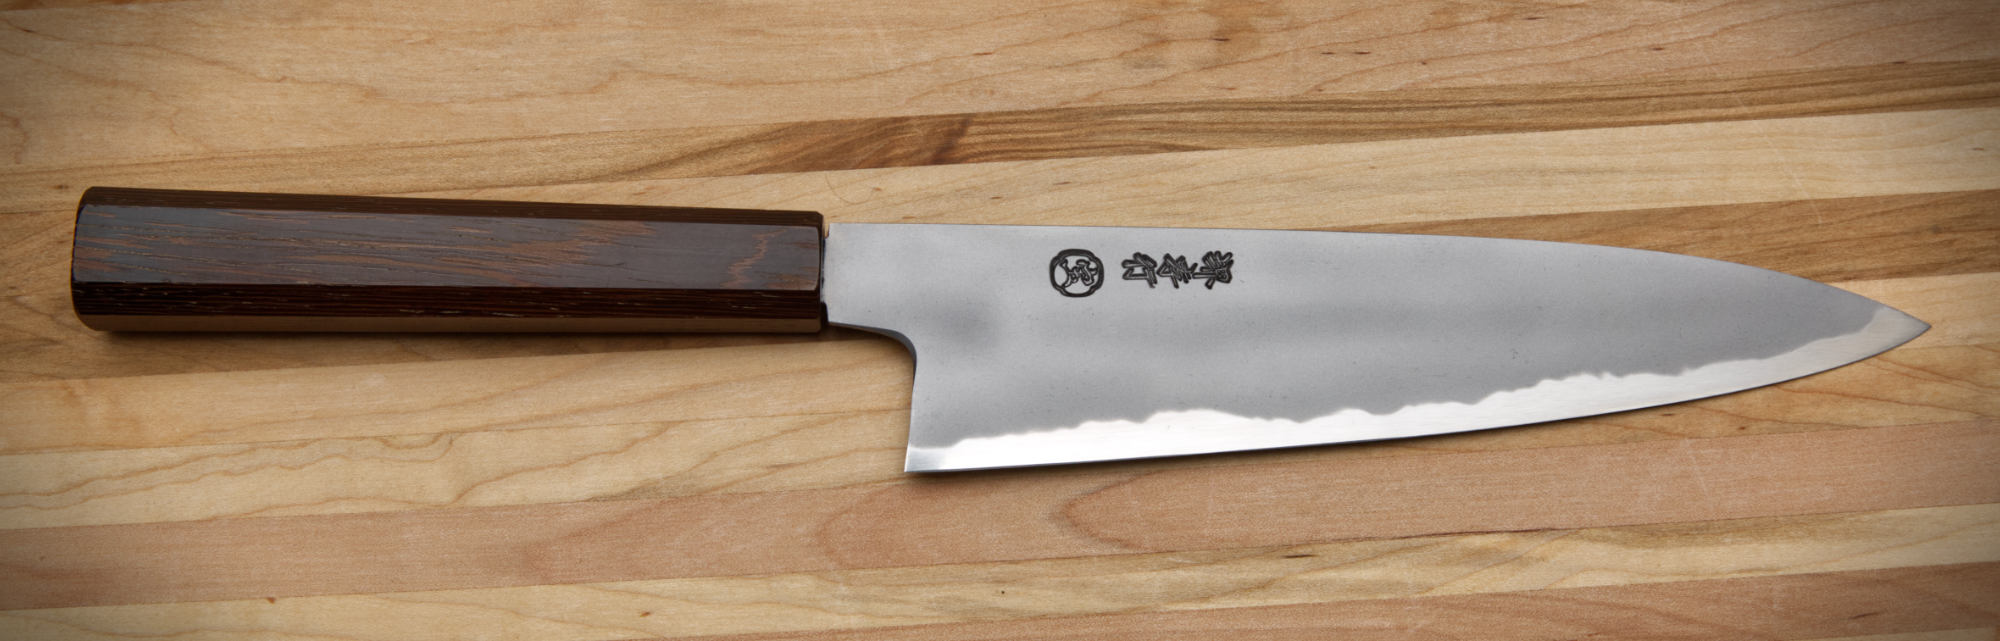 Sakai Takayuki Sanpou Shirogami (White #2) Kasumi Carbon Steel Chef Knife, 210mm (8.3")